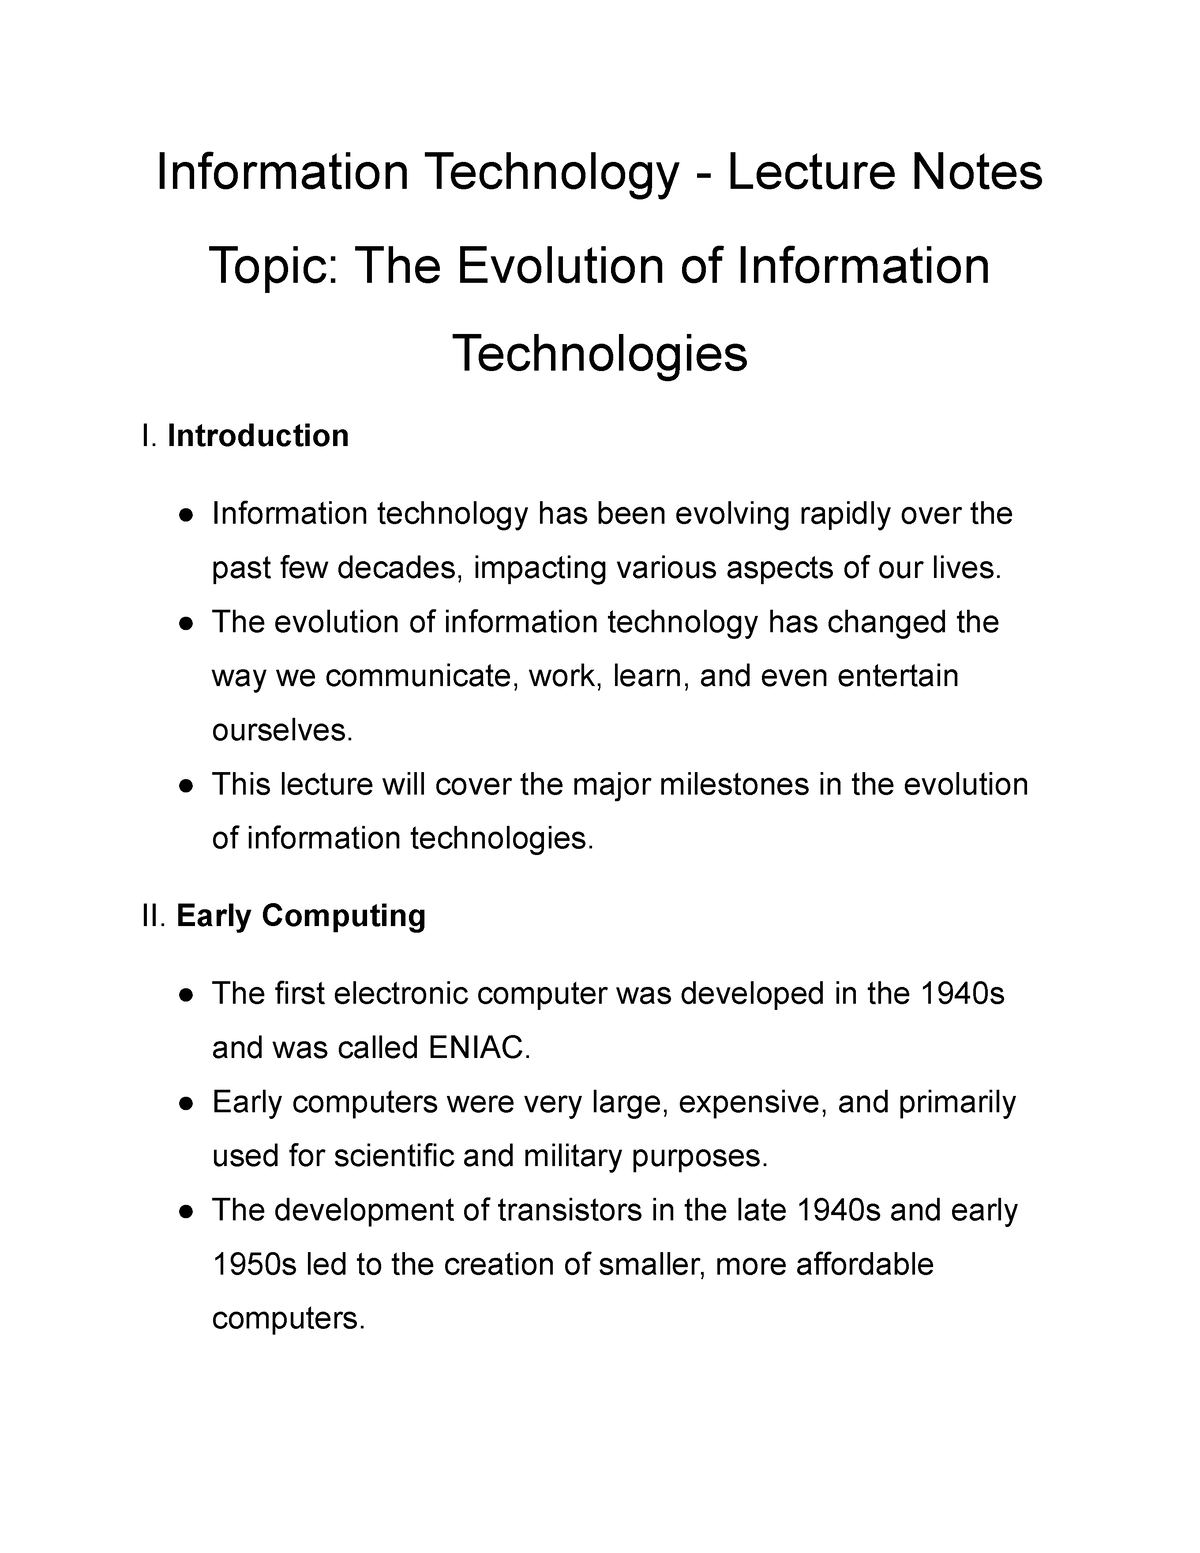 evolution of information technology essay